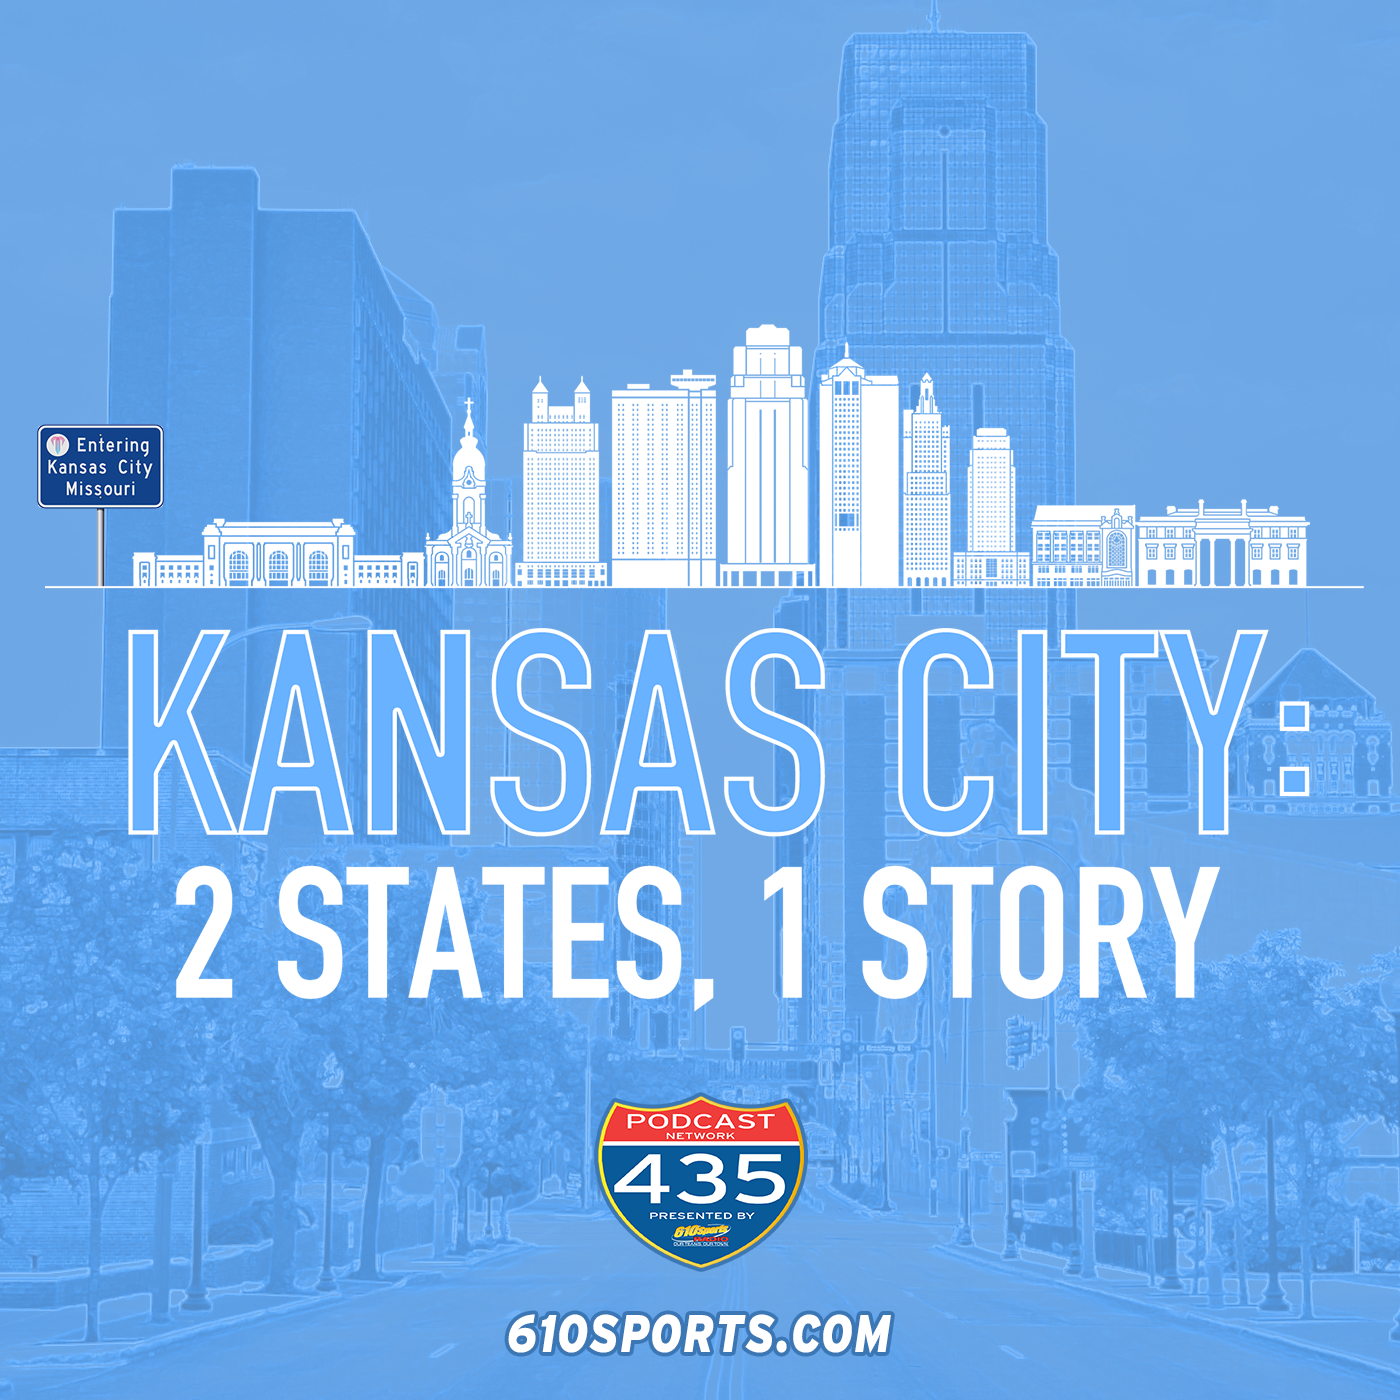 04/18 - Kansas City: 2 States, 1 City